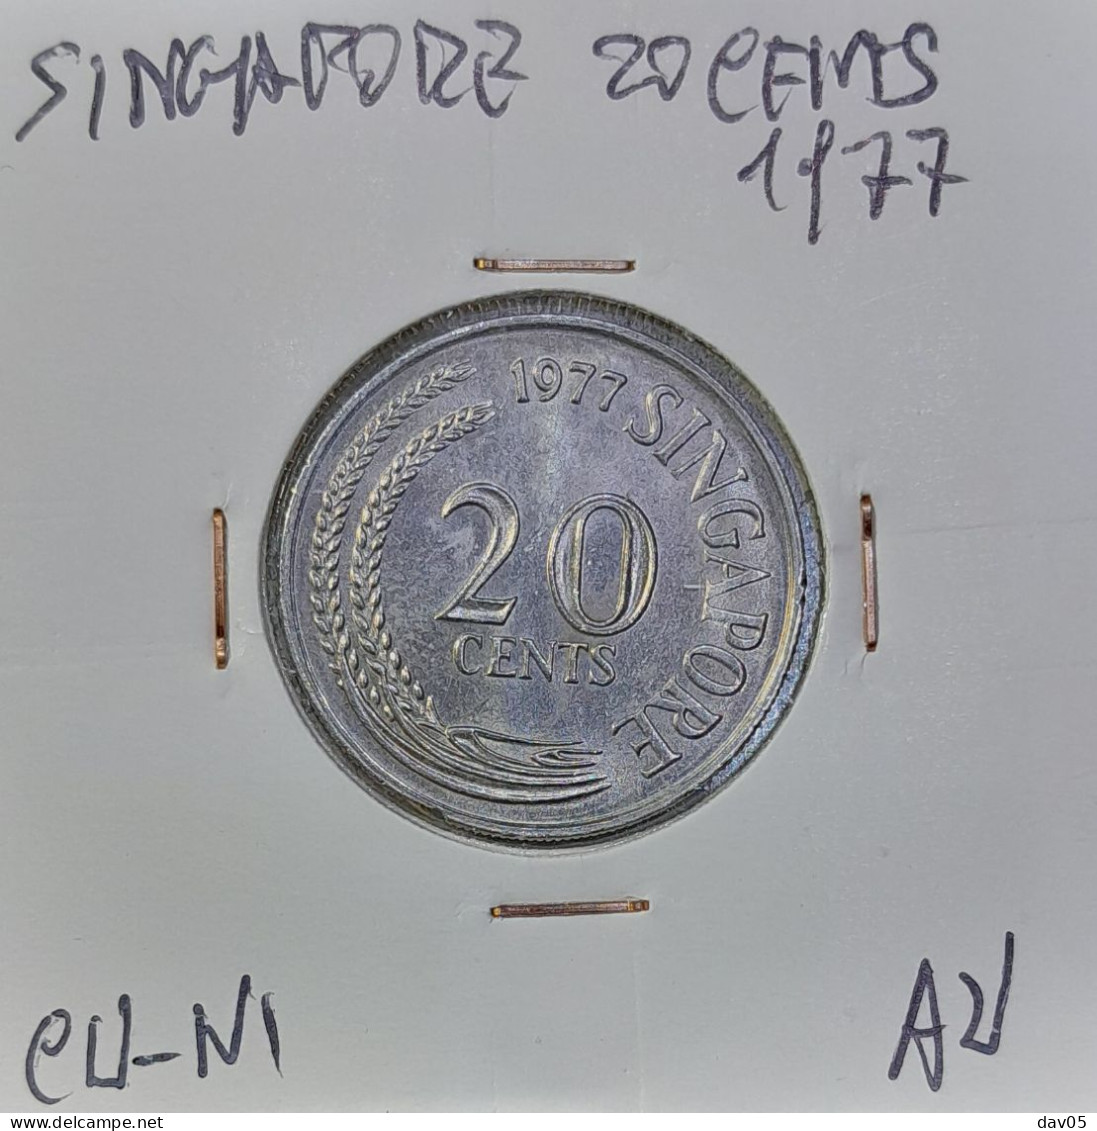 SINGAPORE 20 CENTS 1977 - AU/SUP - Singapore